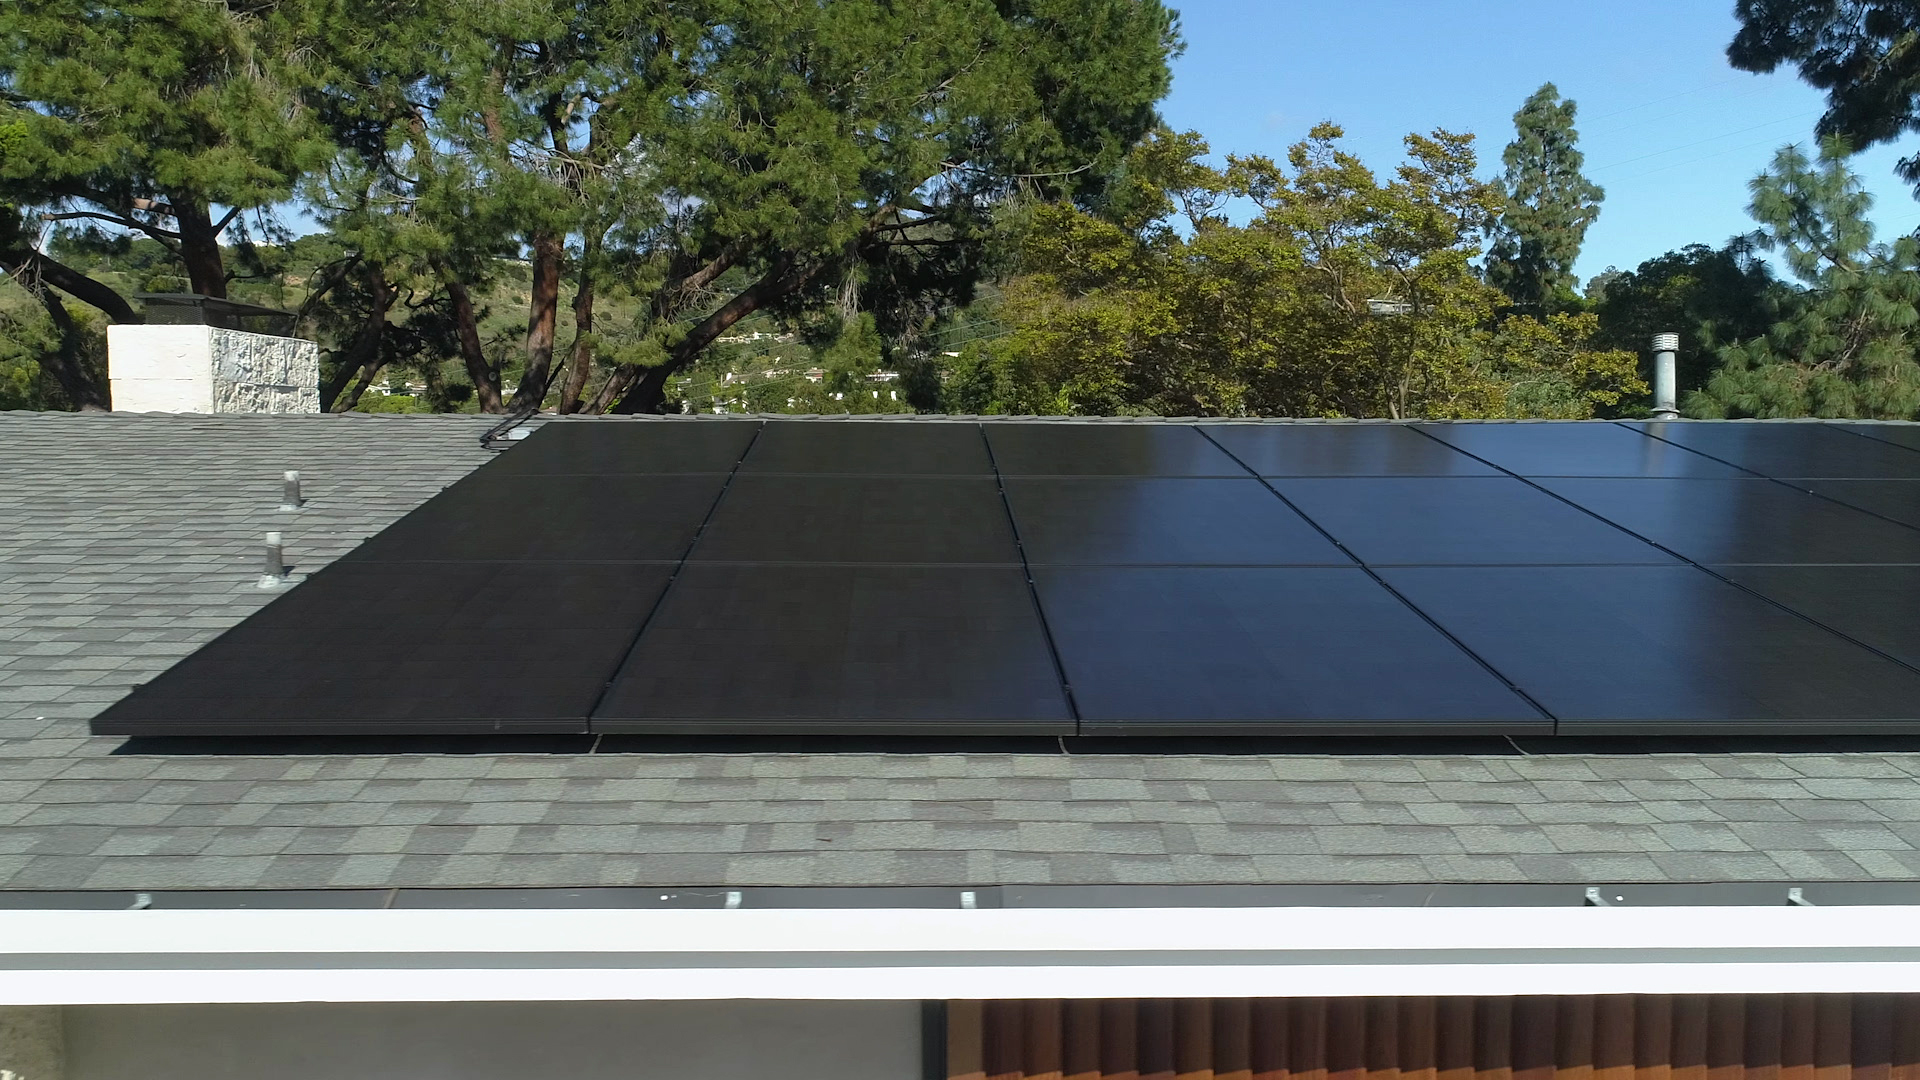 Batter Storage for Solar Panels on Roof